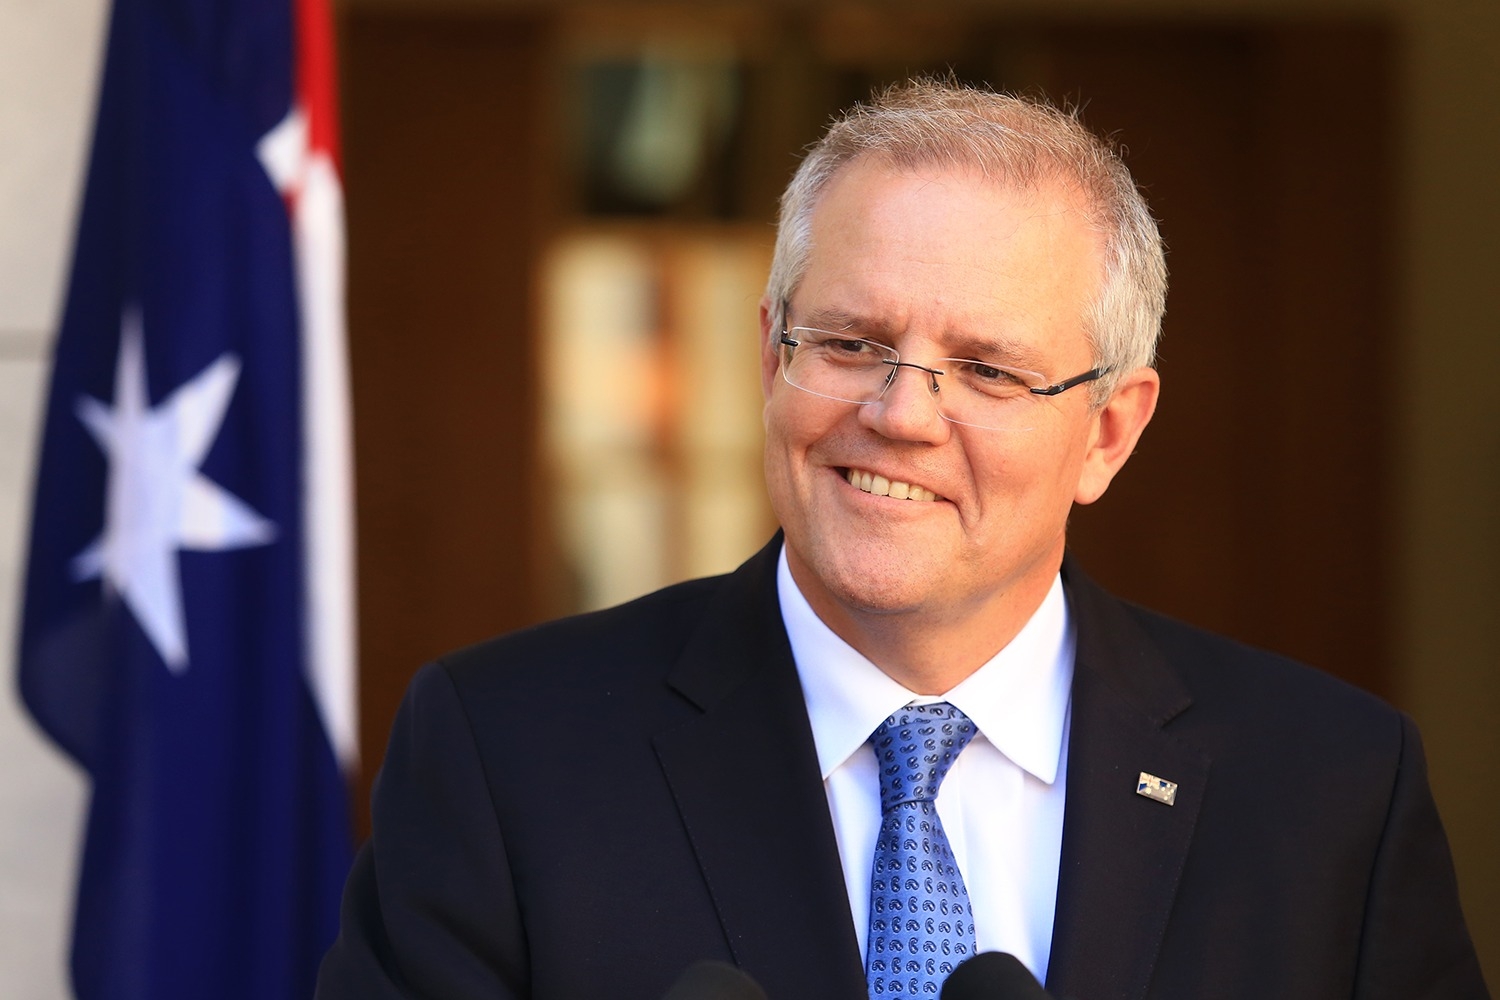 Australia’s former PM Scott Morrison retires from politics